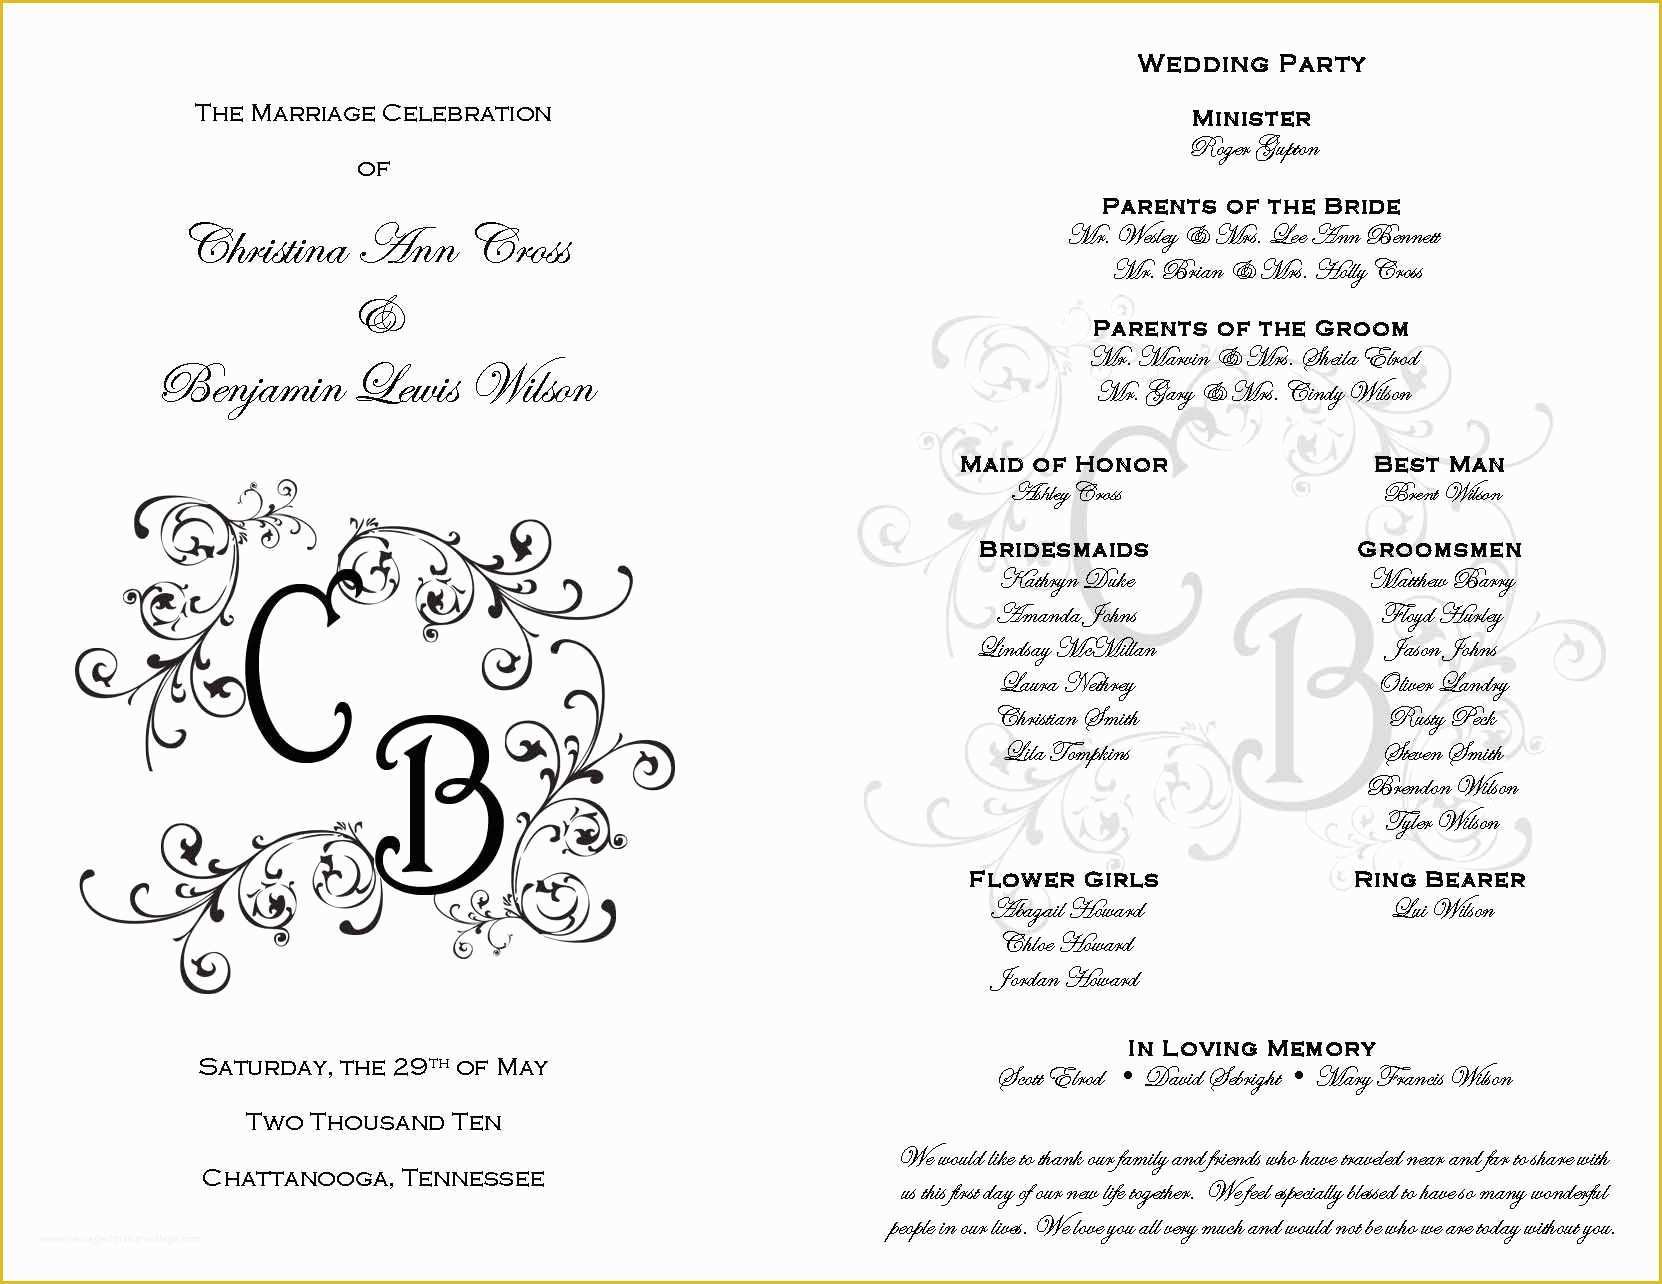 Free Downloadable Wedding Program Template that Can Be Printed Of Printable Wedding Programs On Pinterest